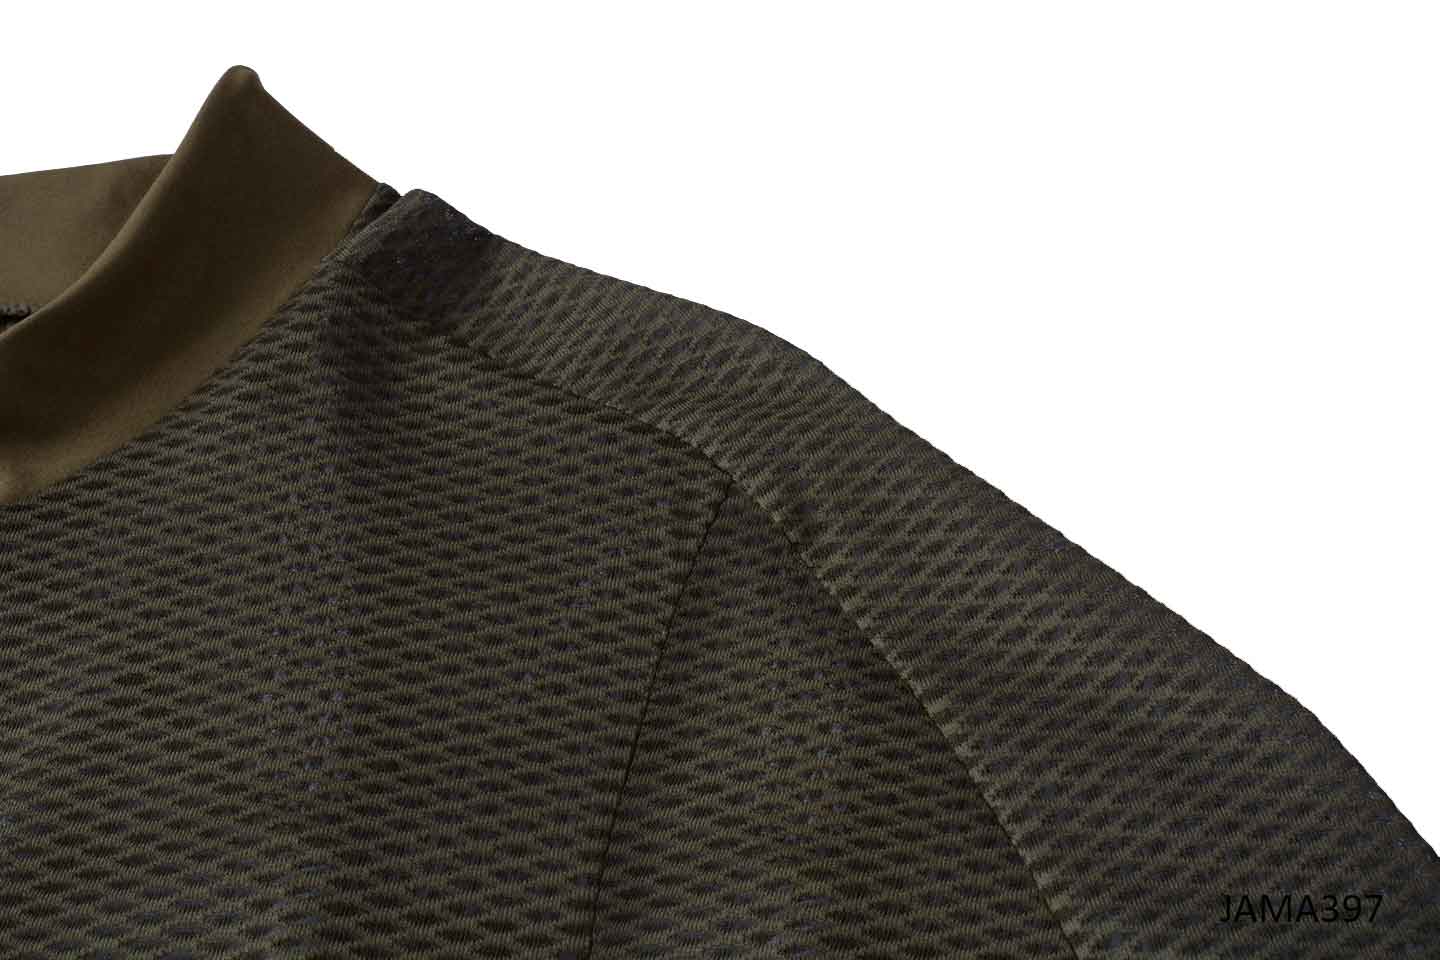 Men's  Short Sleeve jersey JAMA397